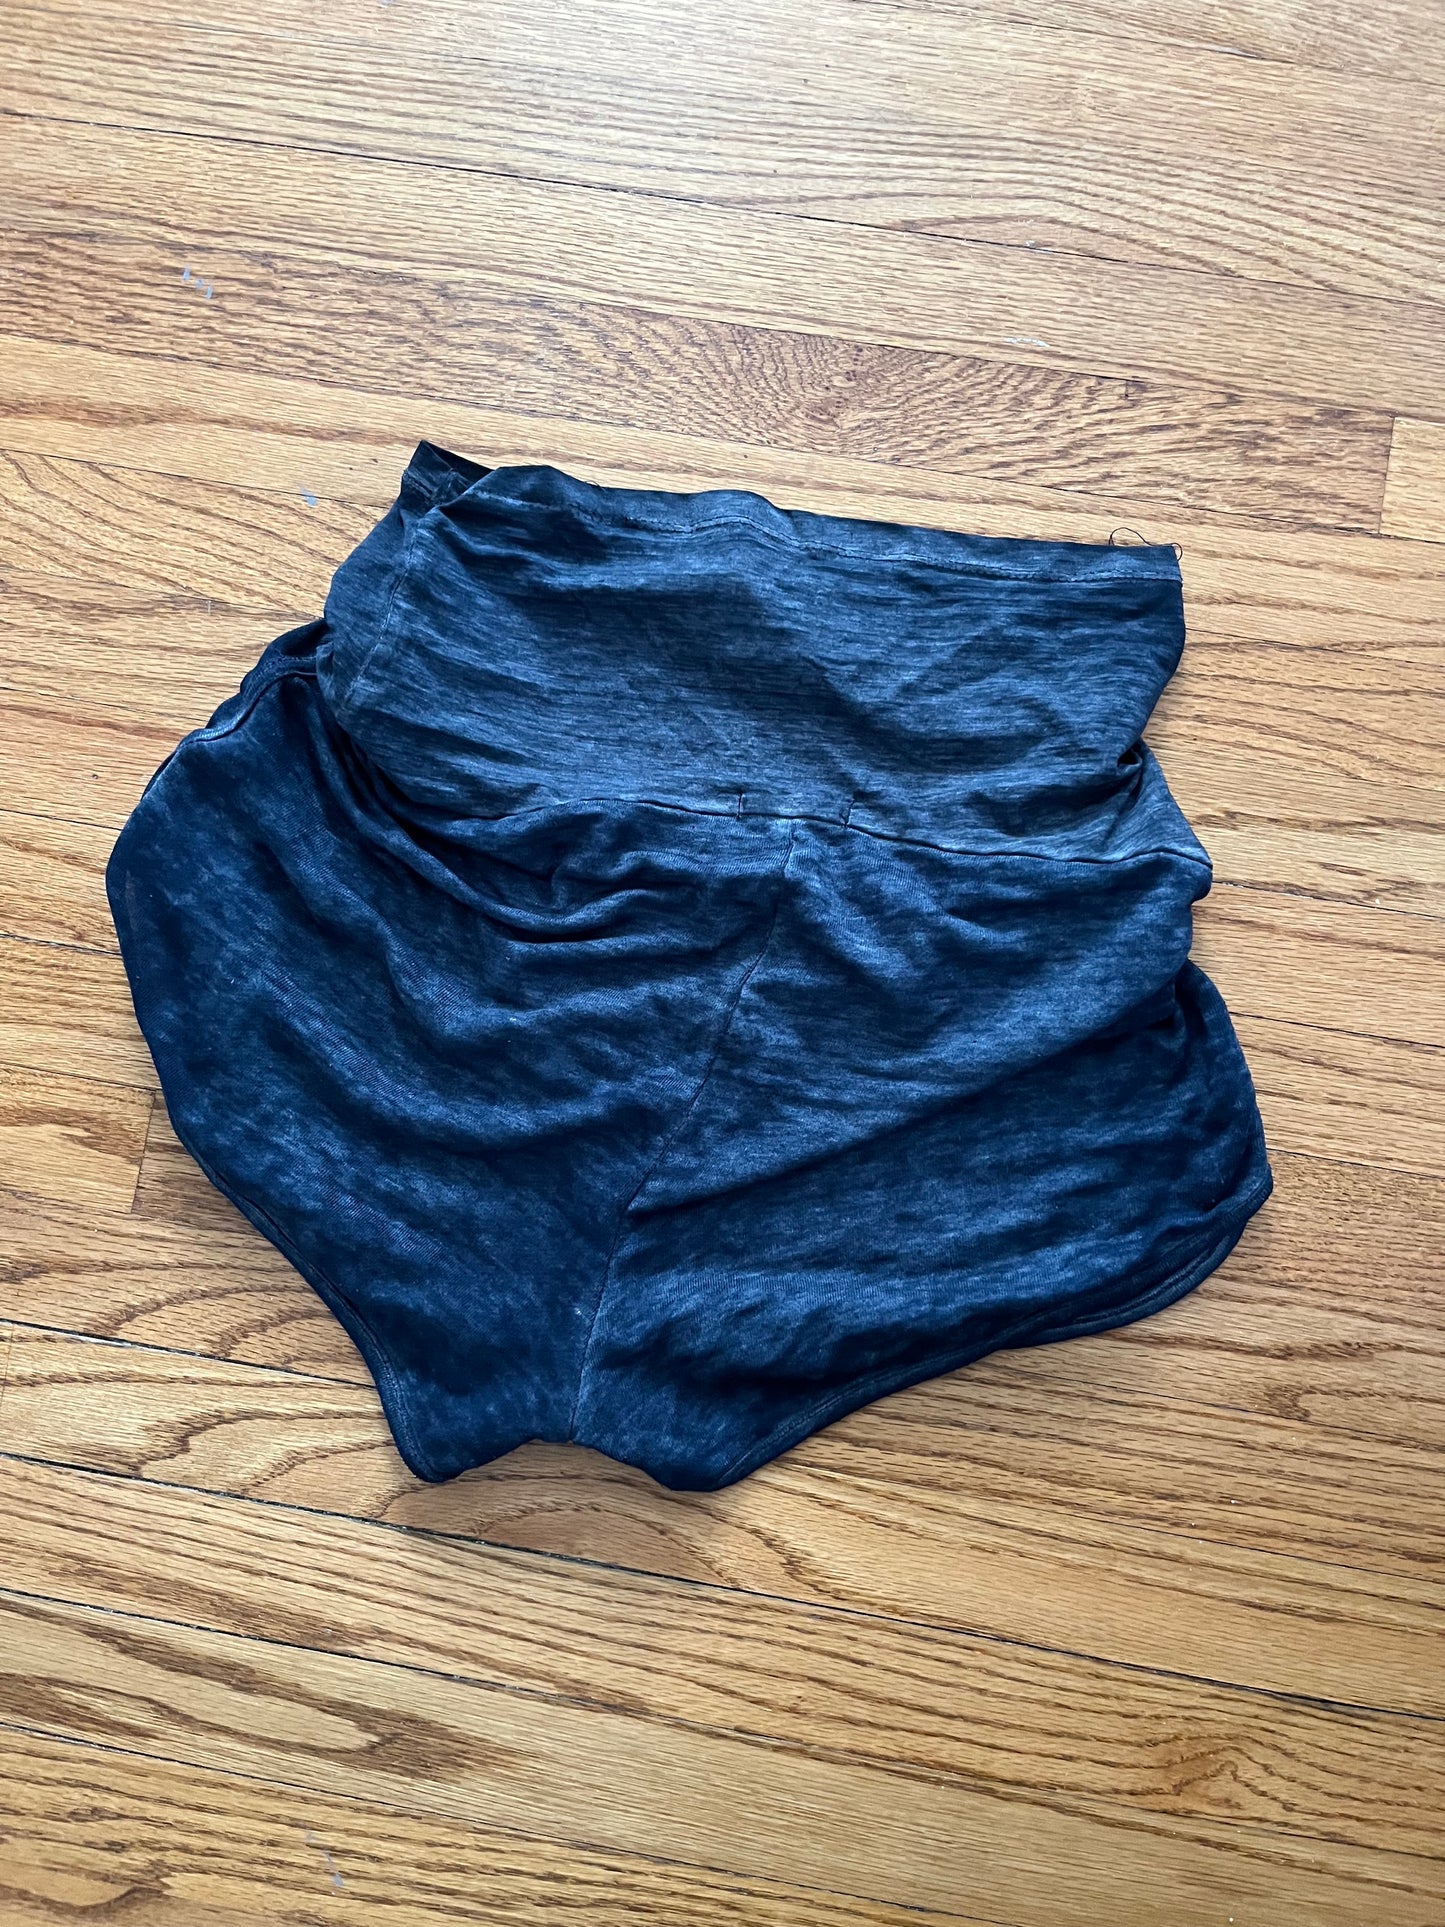 Threads 4 Thought maternity greta burnout navy blue shorts small PPU 45208